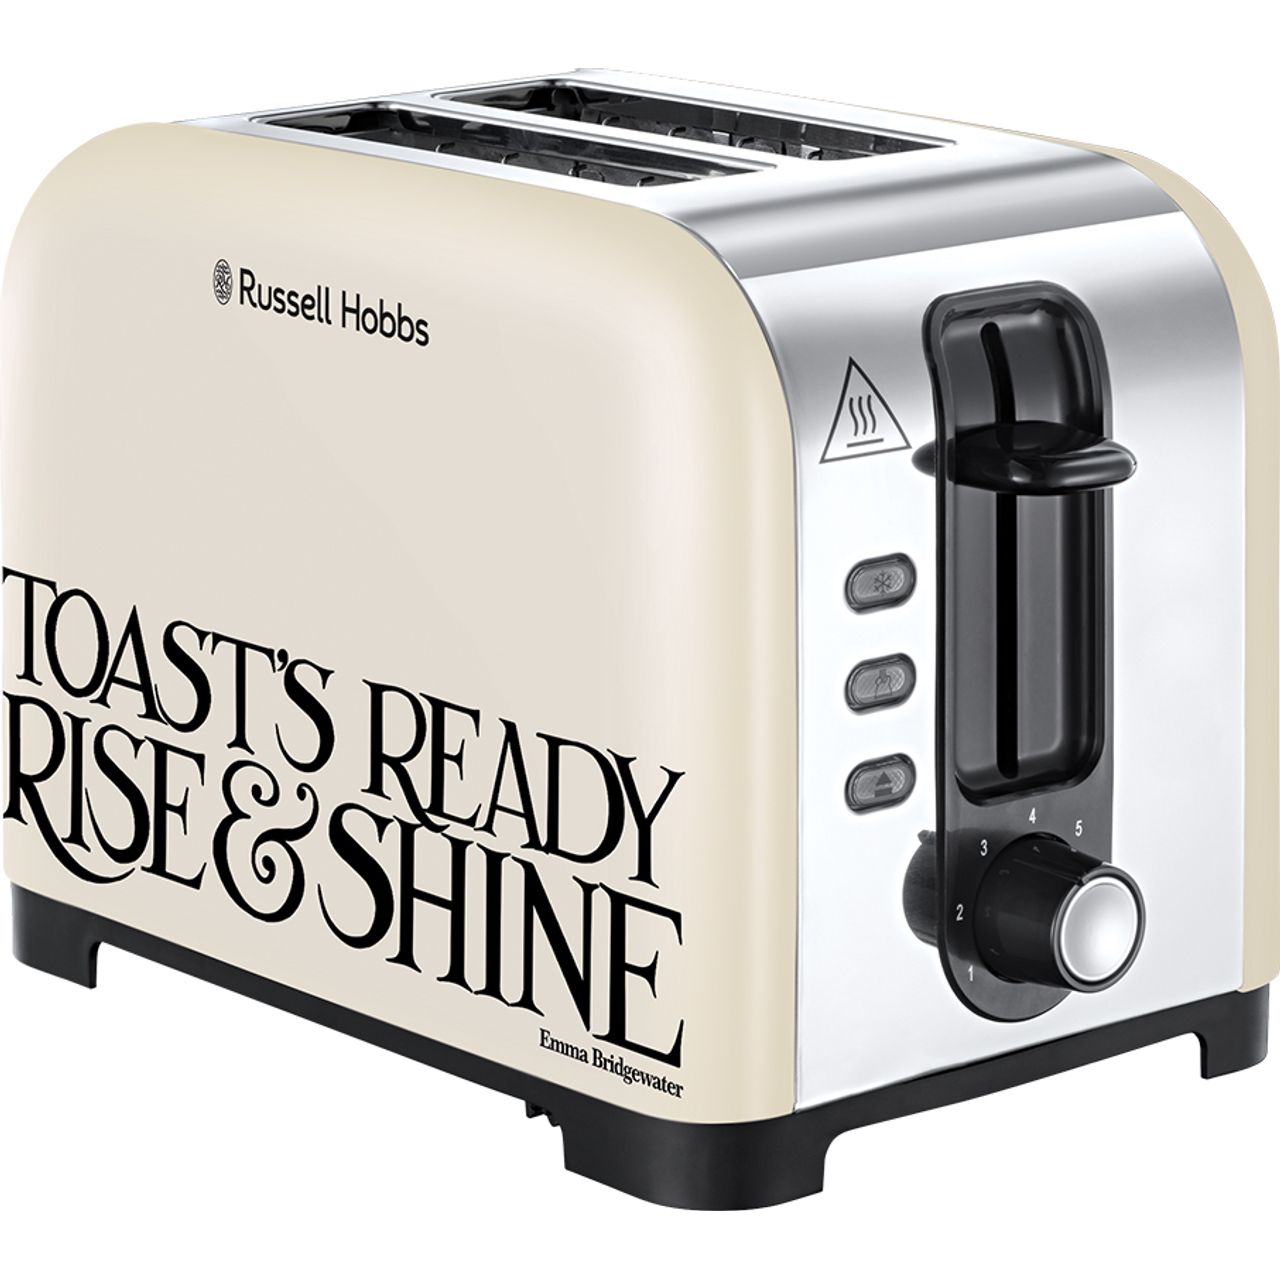 Russell Hobbs Emma Bridgewater Toast & Marmalade Design 23538 2 Slice Toaster Review